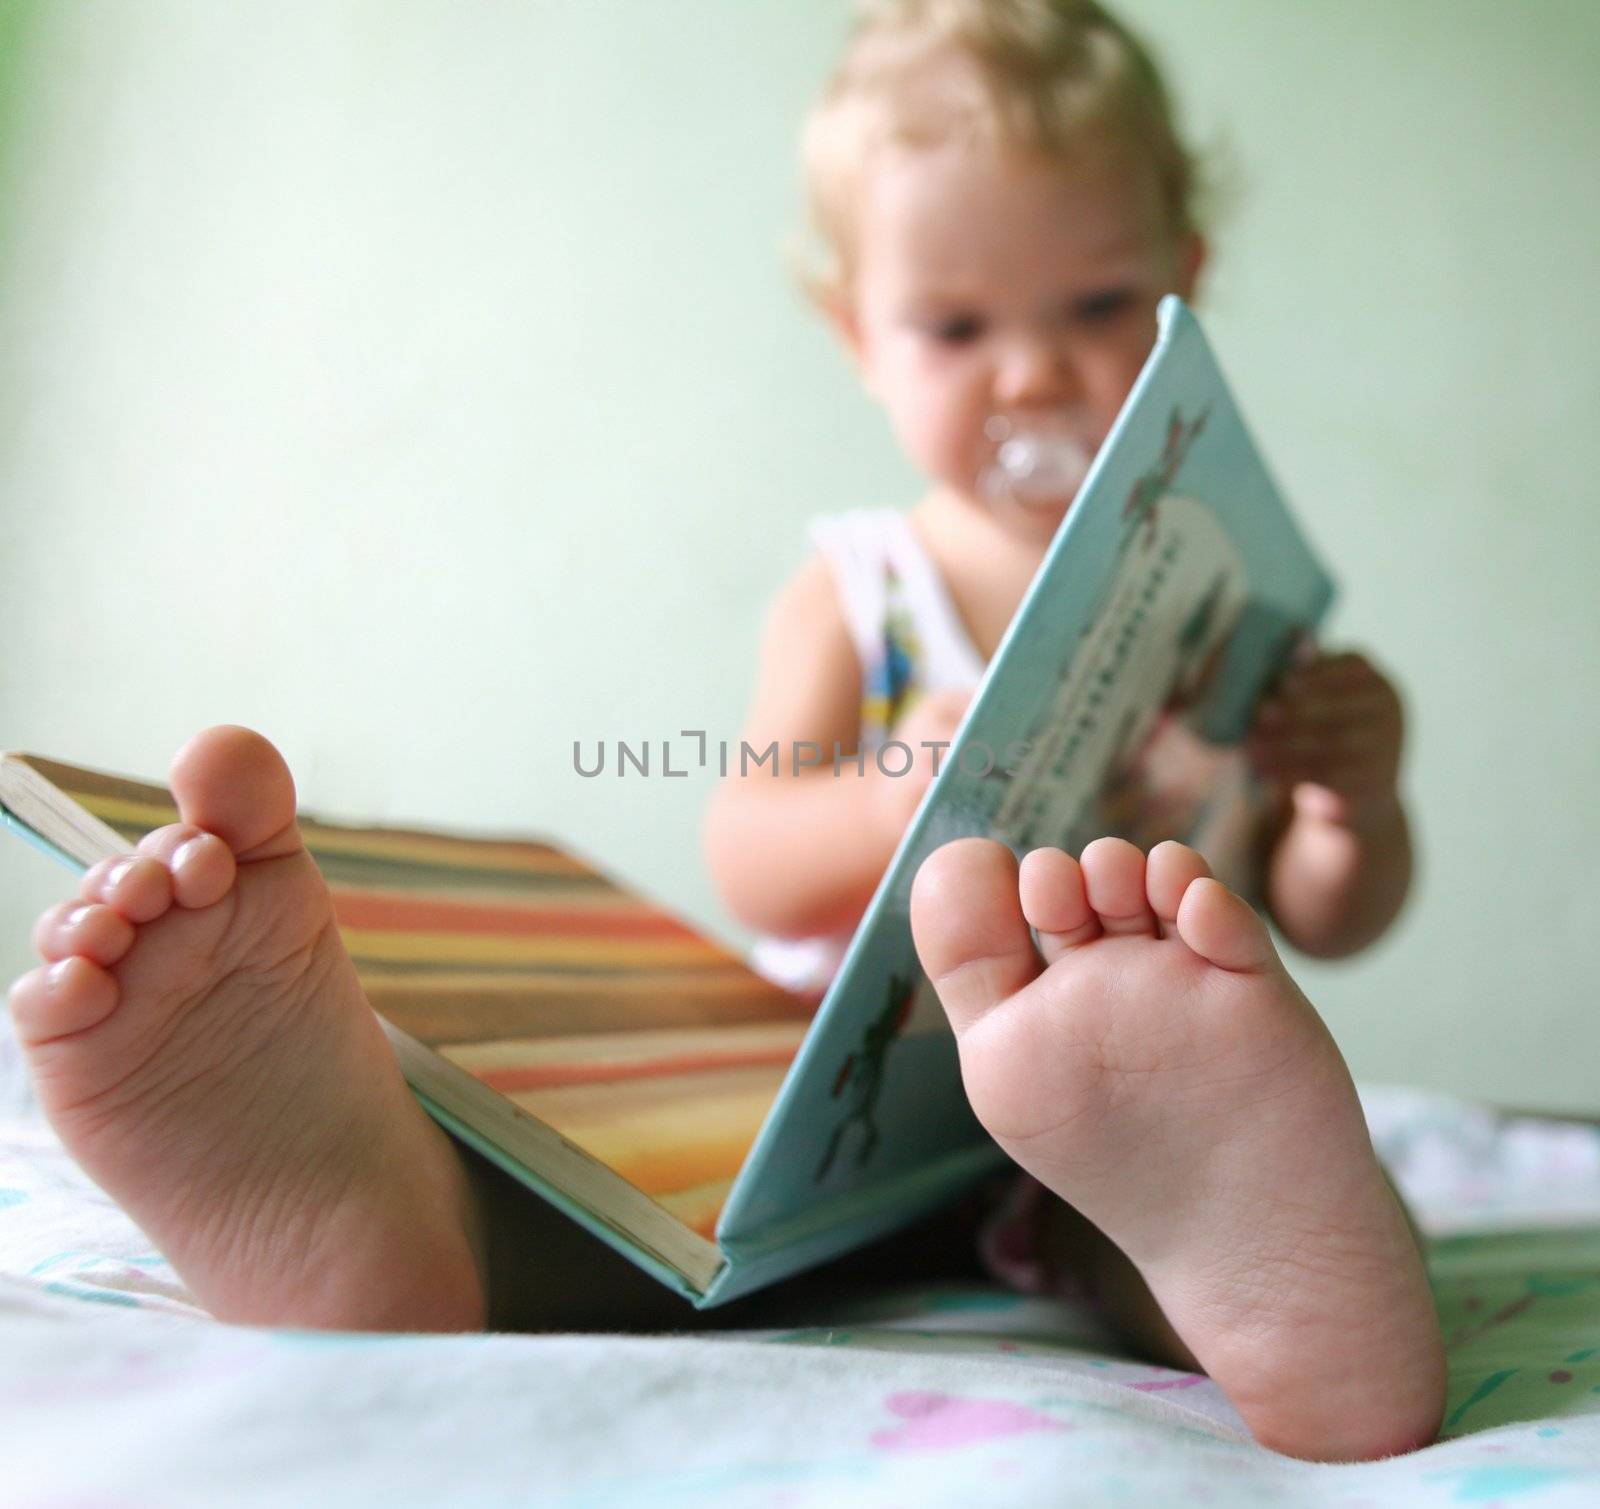 An image of a toddler reading a book. Foots closeup